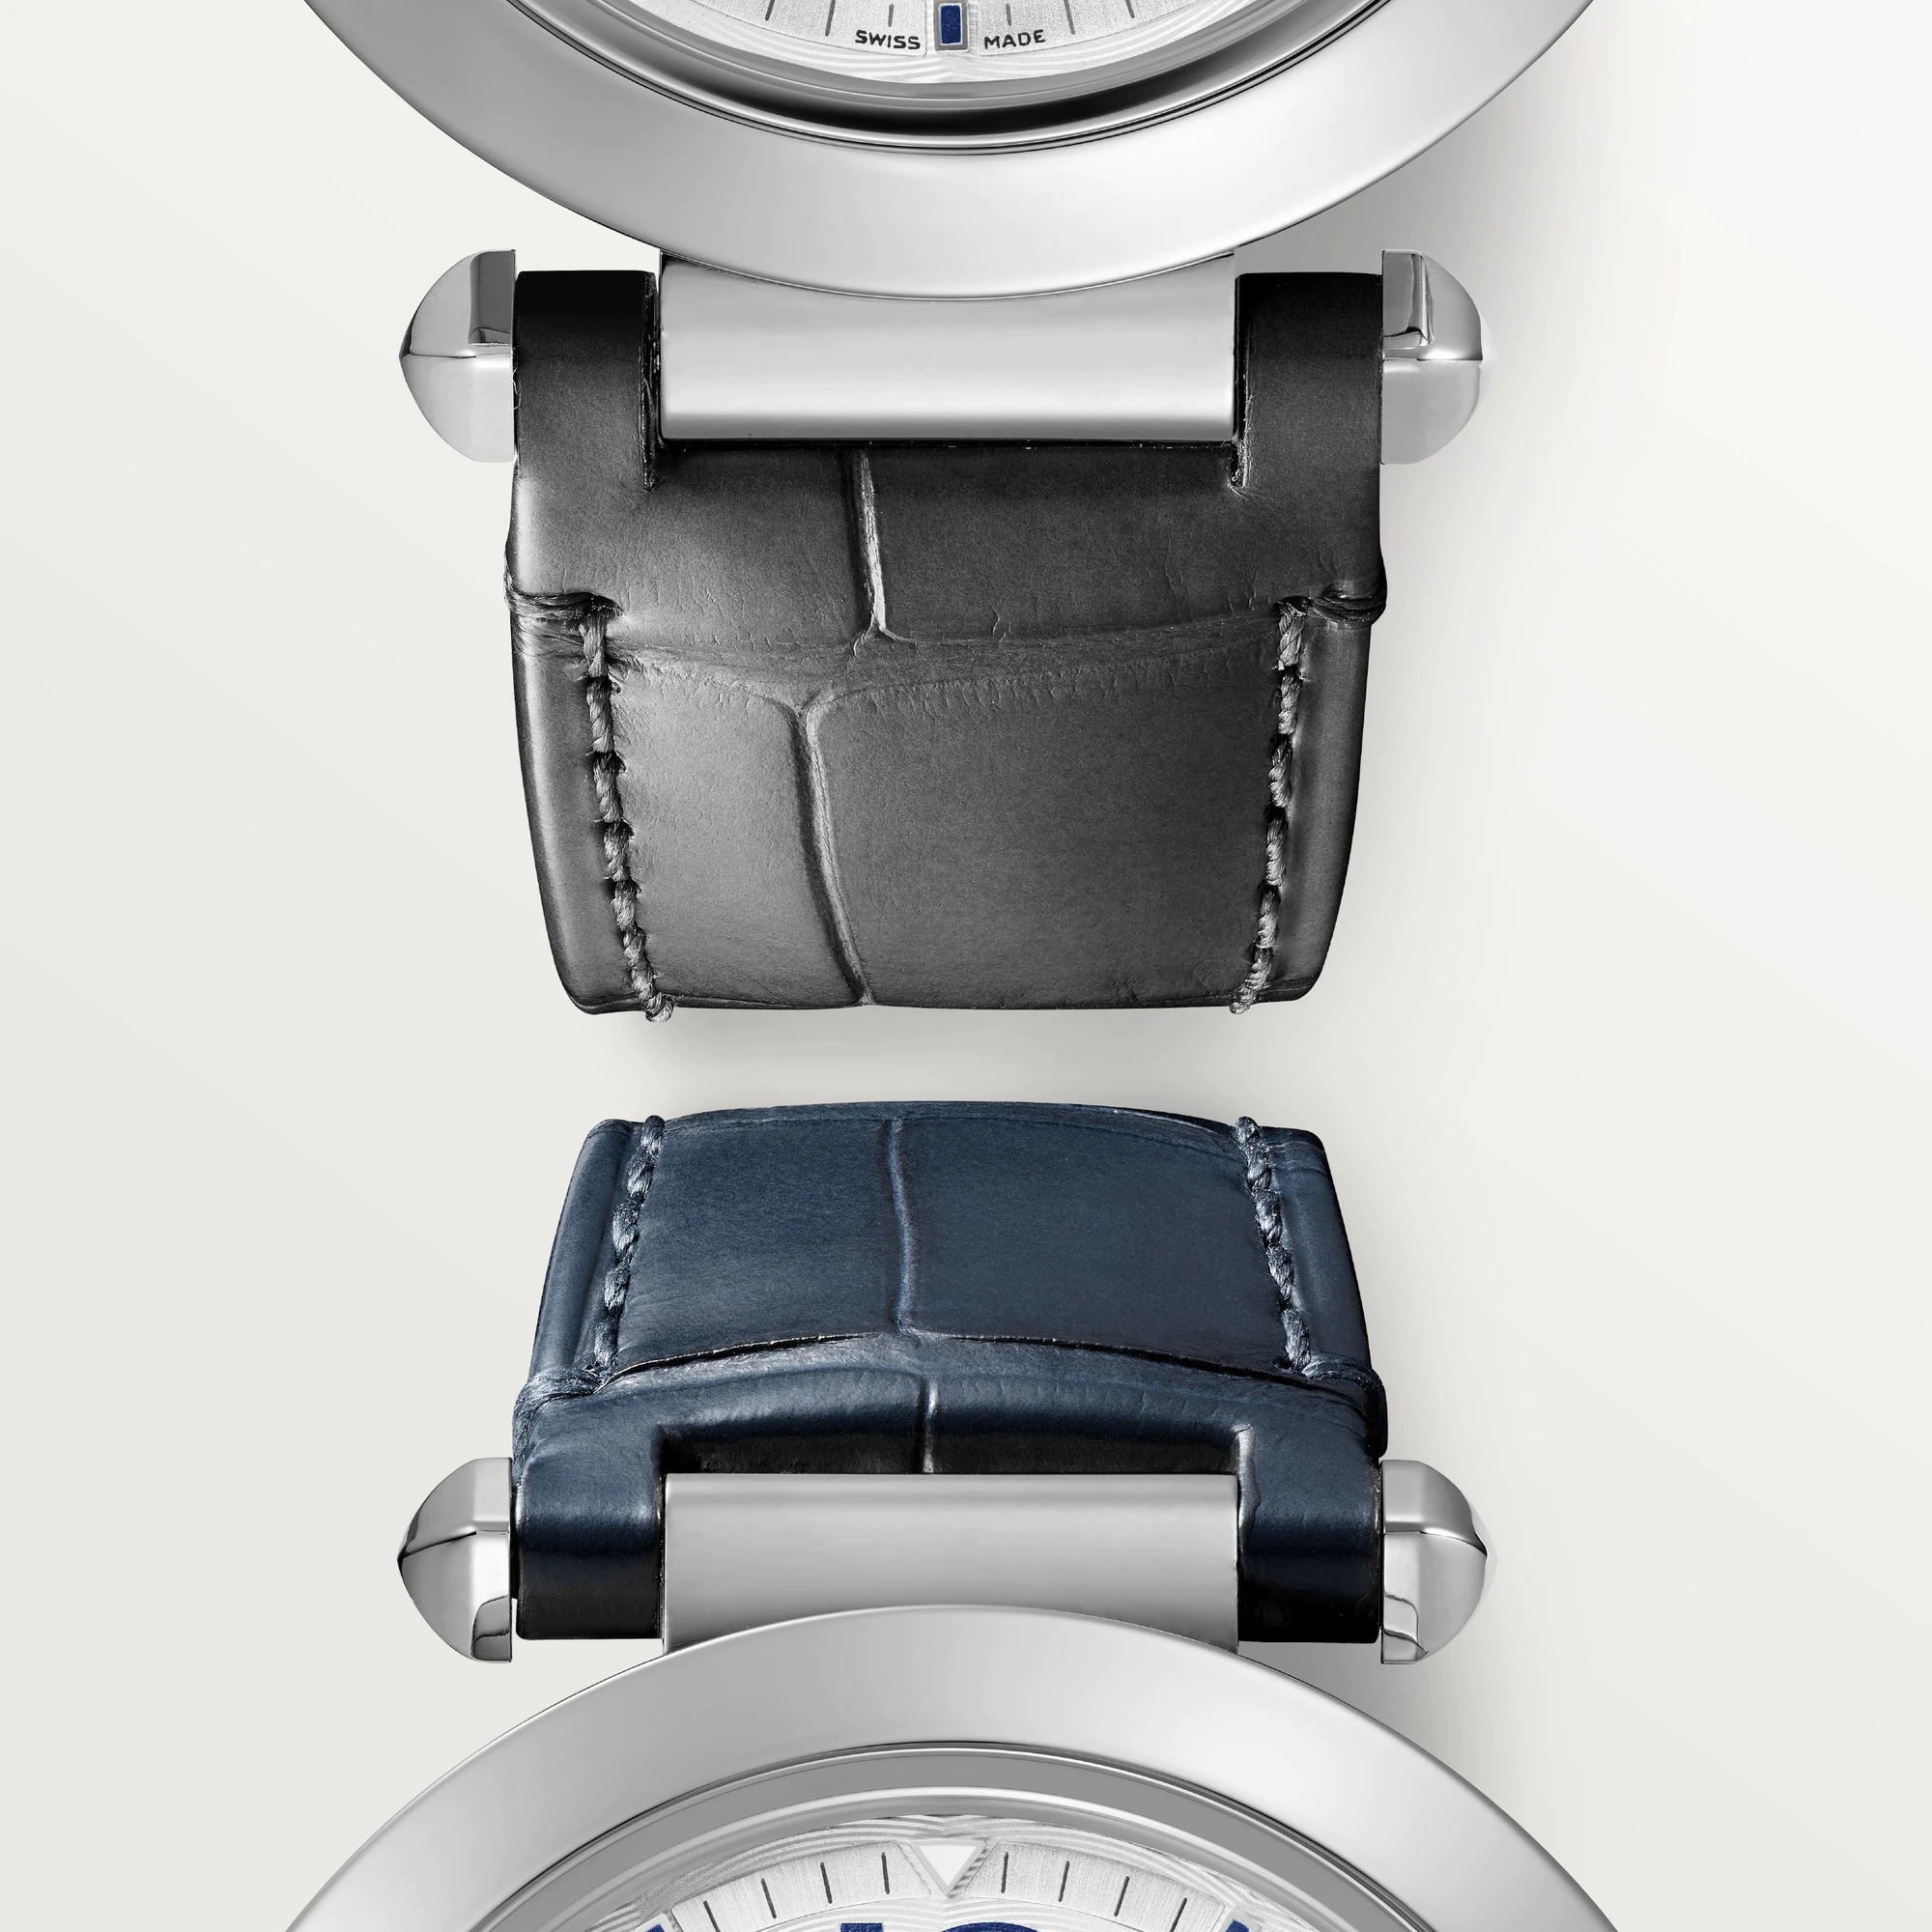 Cartier Pasha 41 mm Stainless steel Men's Watch